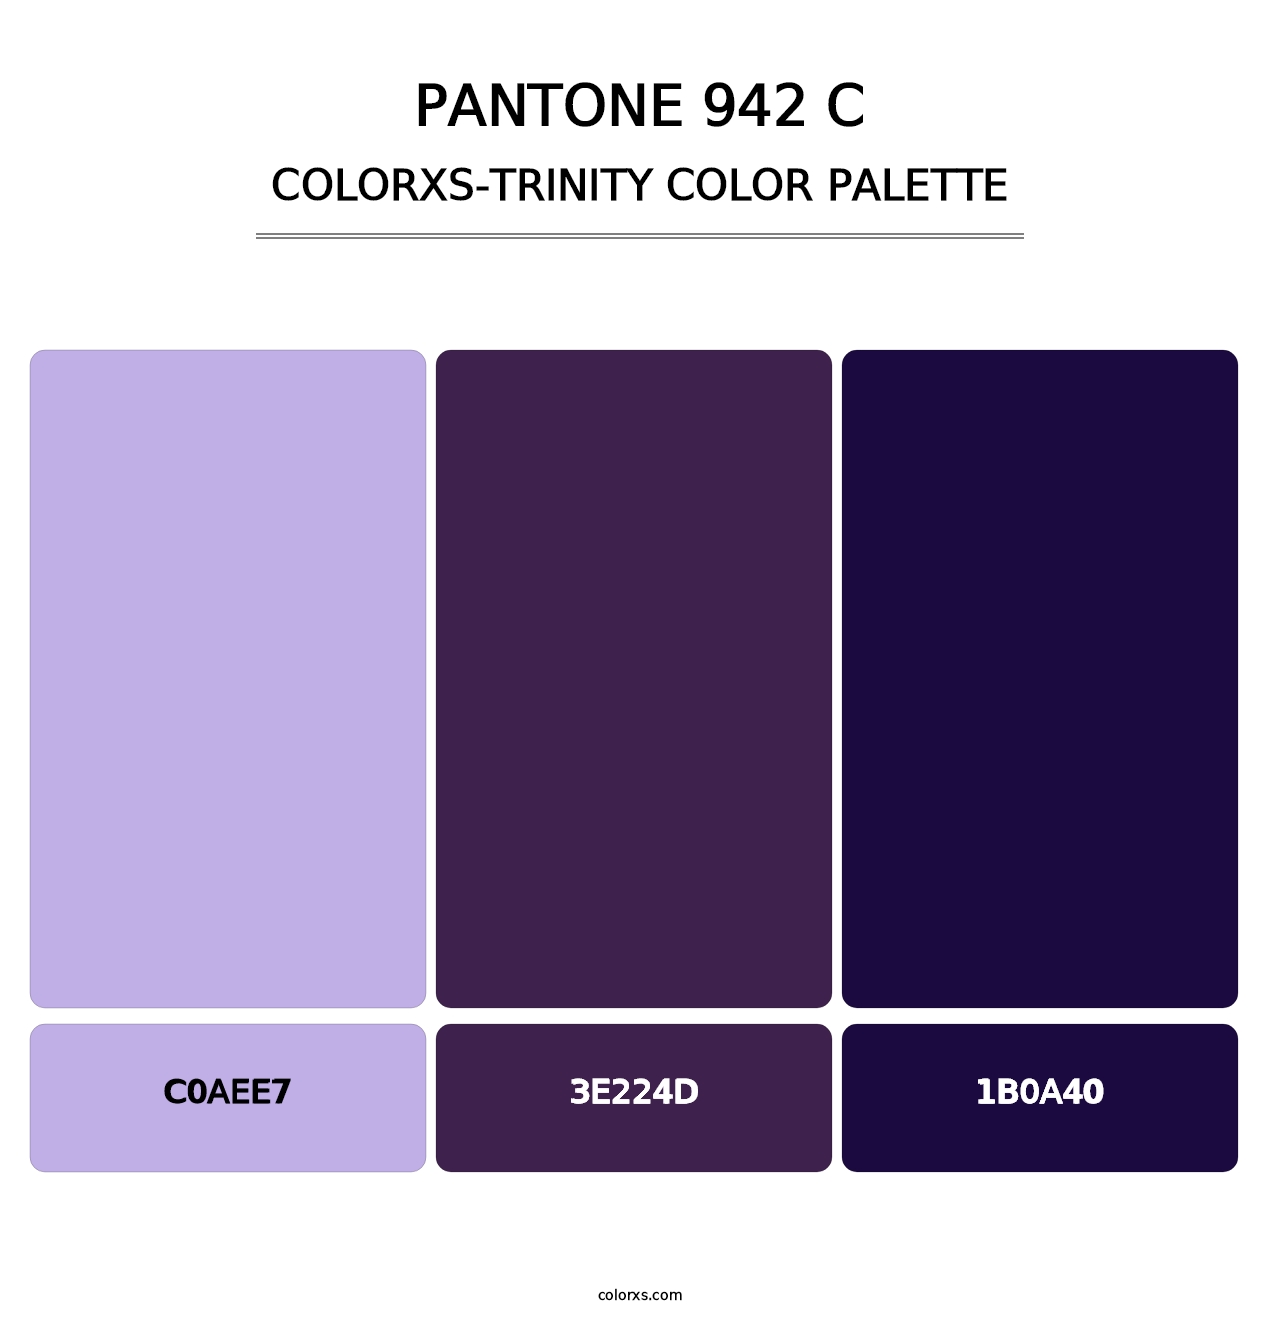 PANTONE 942 C - Colorxs Trinity Palette